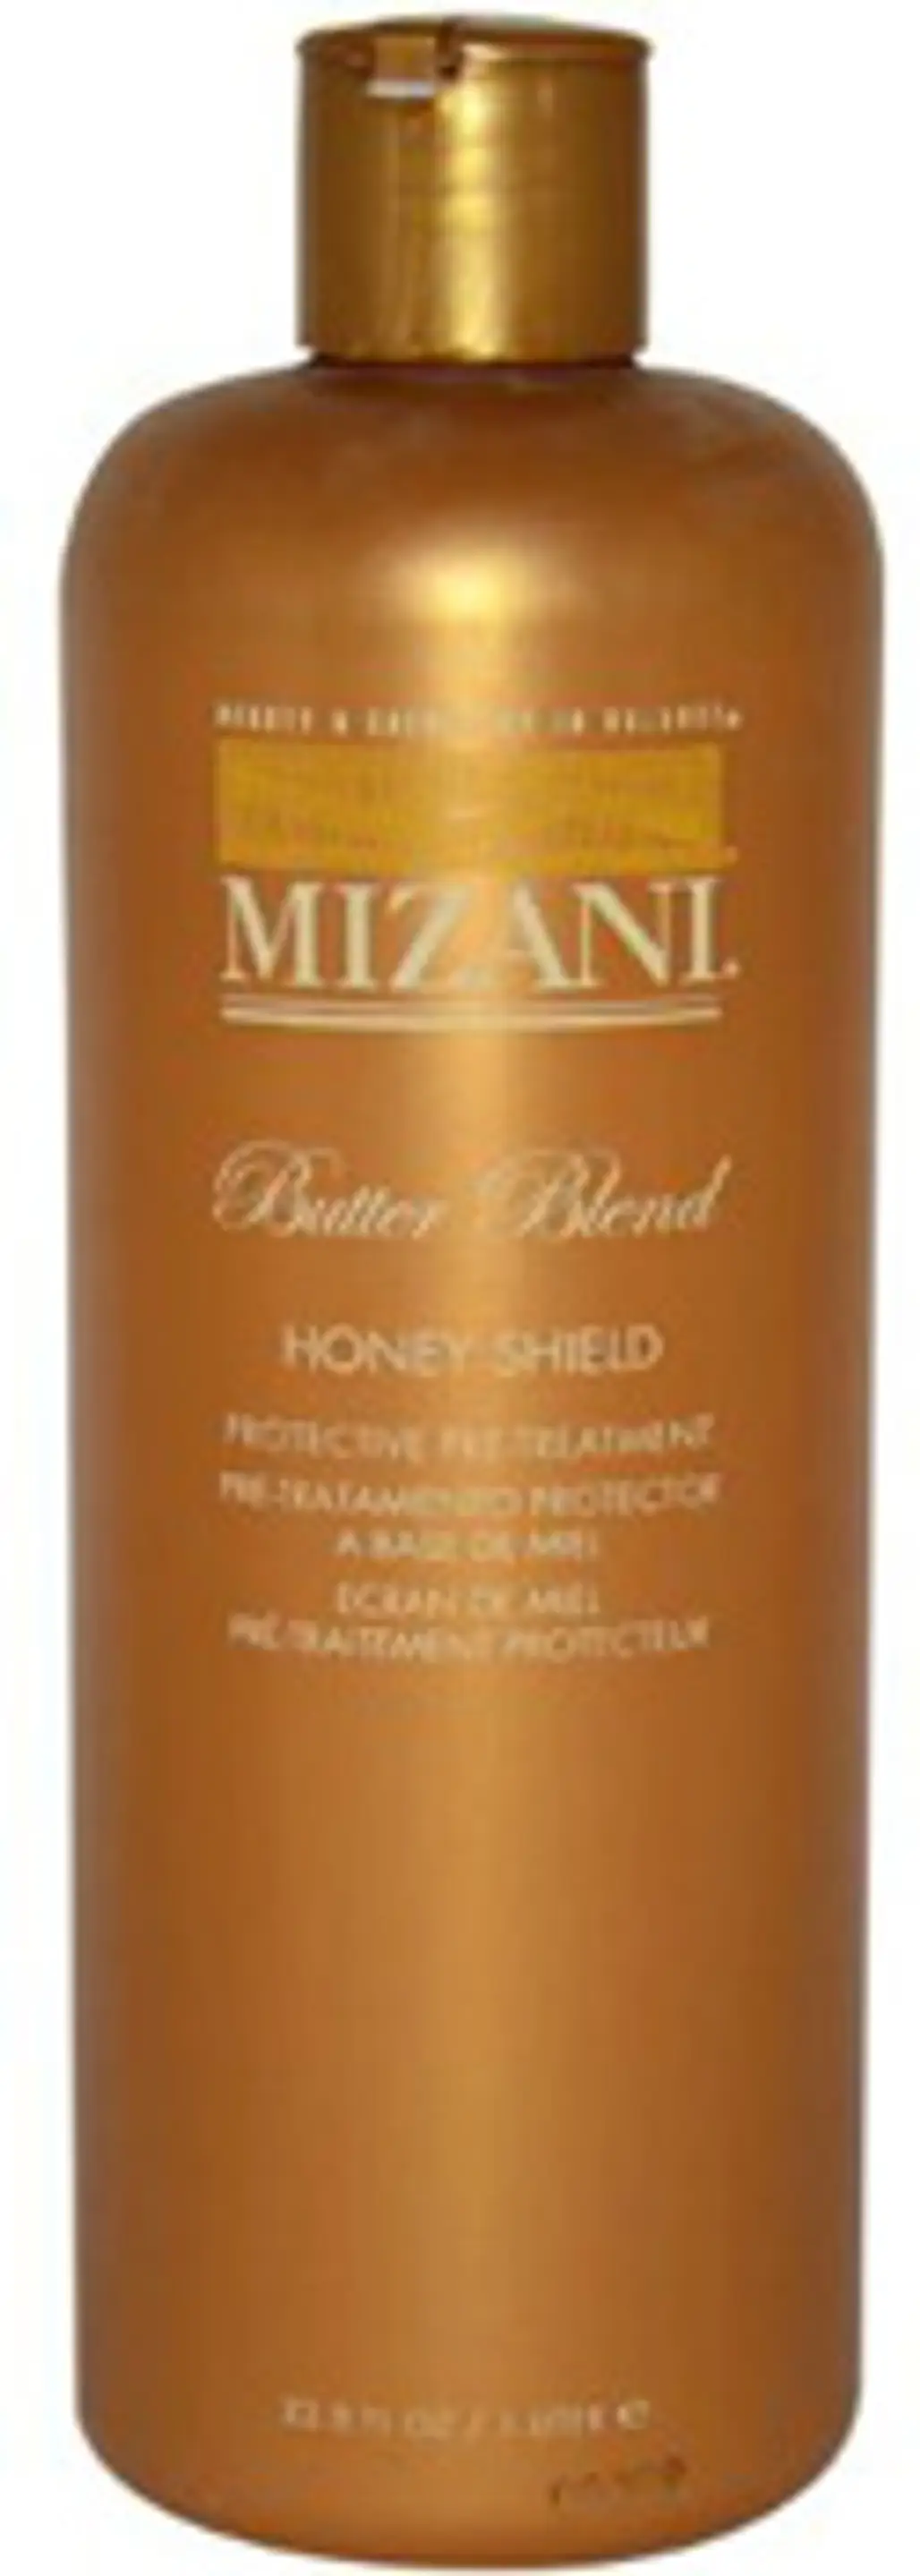 Mizani Butter Blend Honey Shield